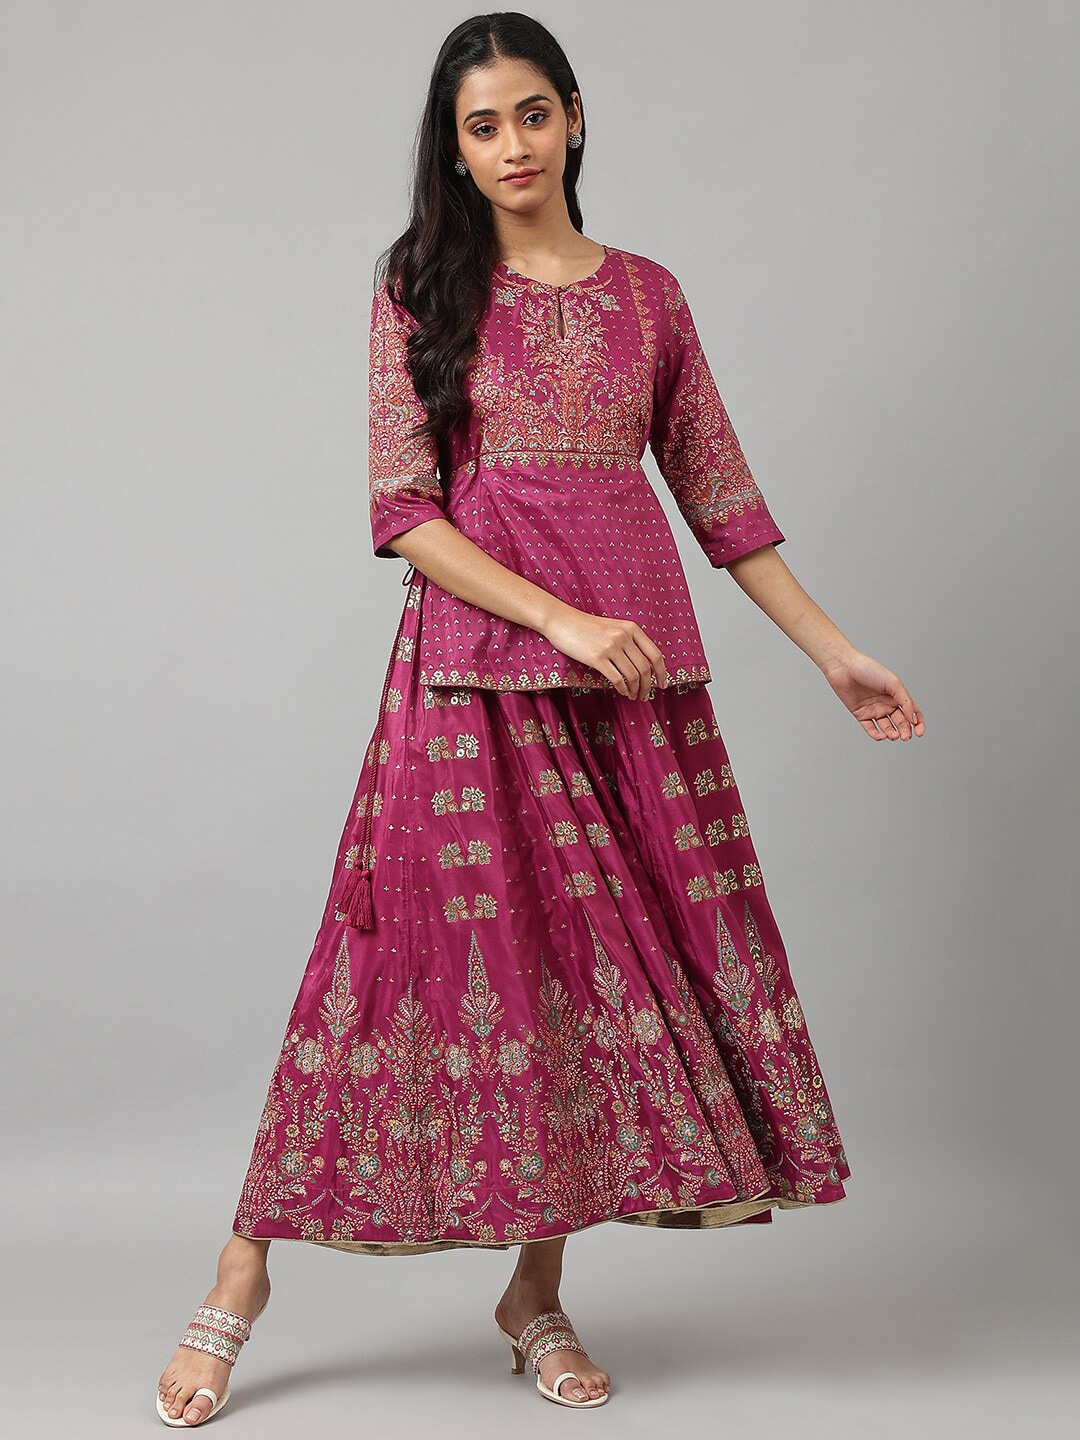 W Maroon & Gold-Toned Ethnic Motifs Satin Ethnic Maxi Maxi Dress Price in India